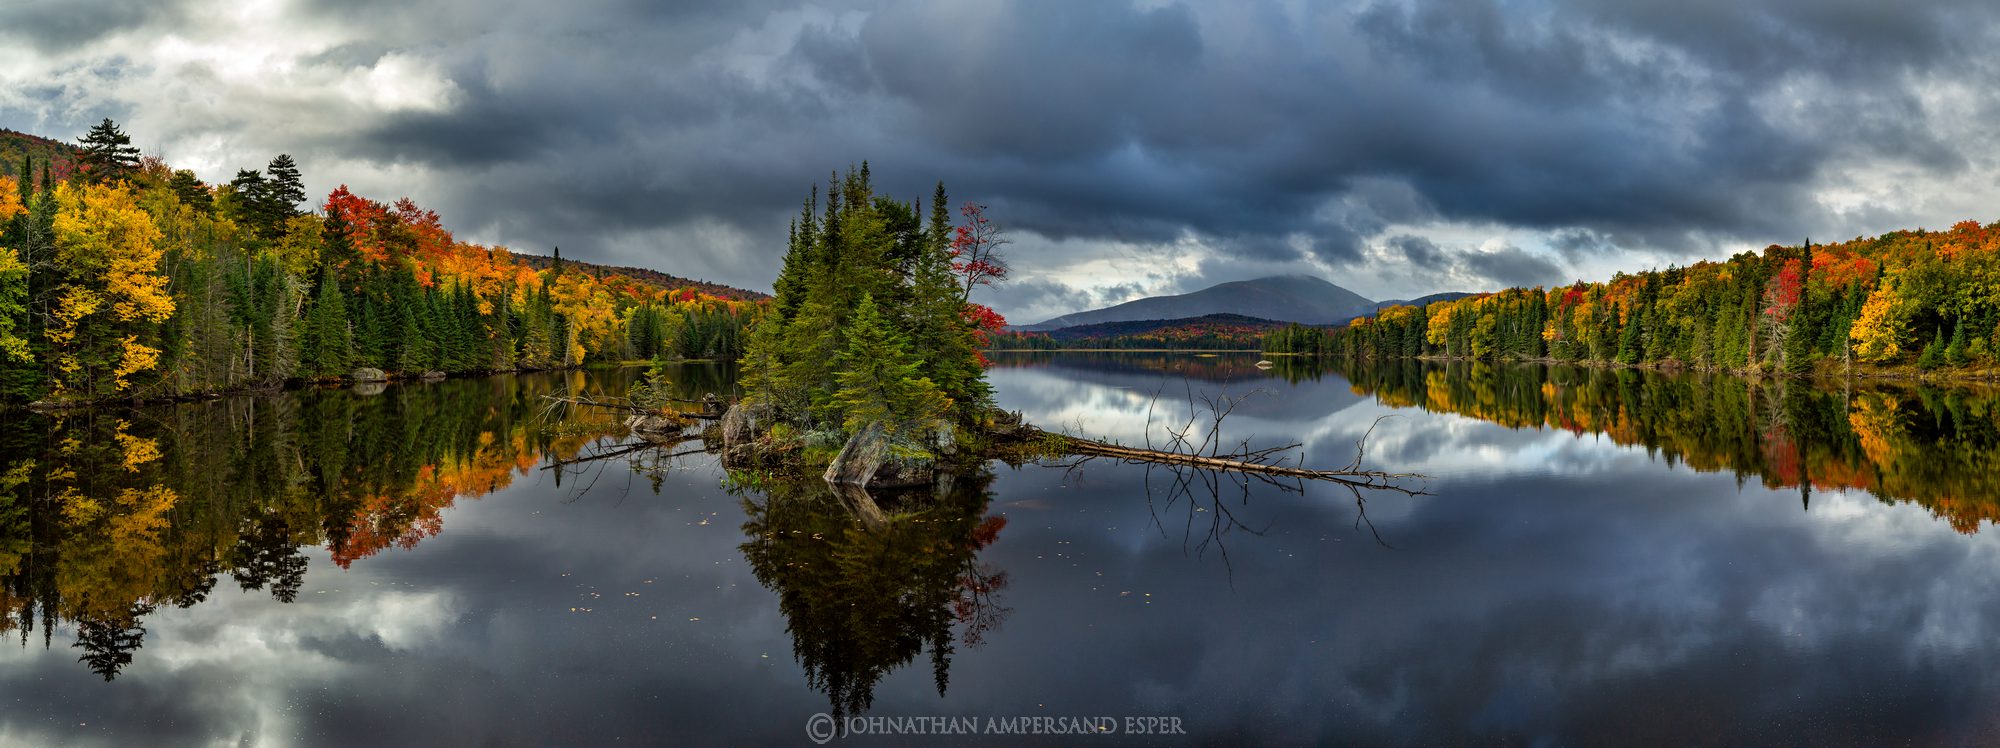 County Line Flow,Kempshall Mt,island,reflection,fall,2016,lake,Adirondacks,Adirondack lake,Adirondack photography,Adirondack...